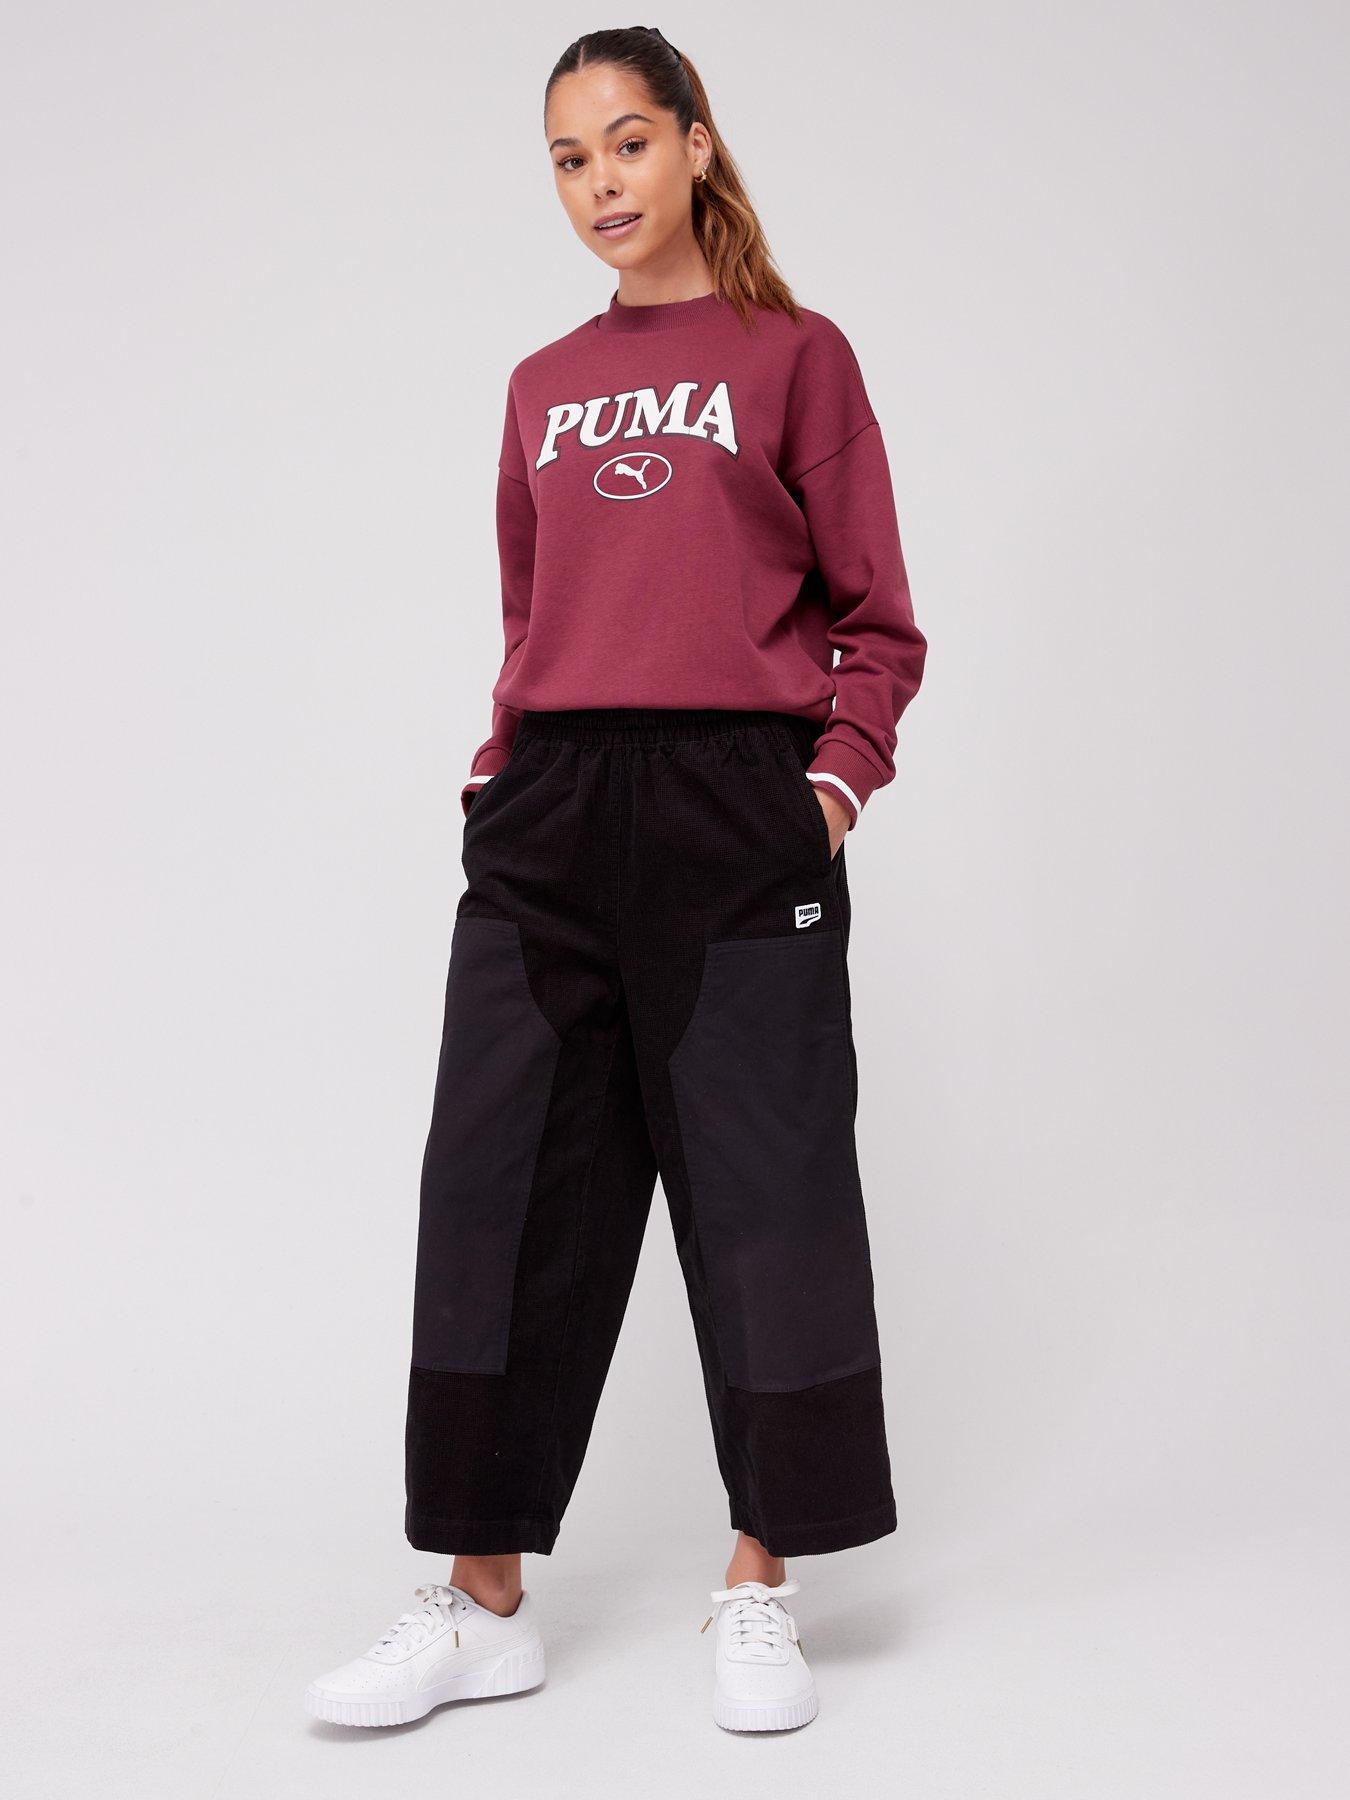 Puma Bra, Women's Fashion, Activewear on Carousell